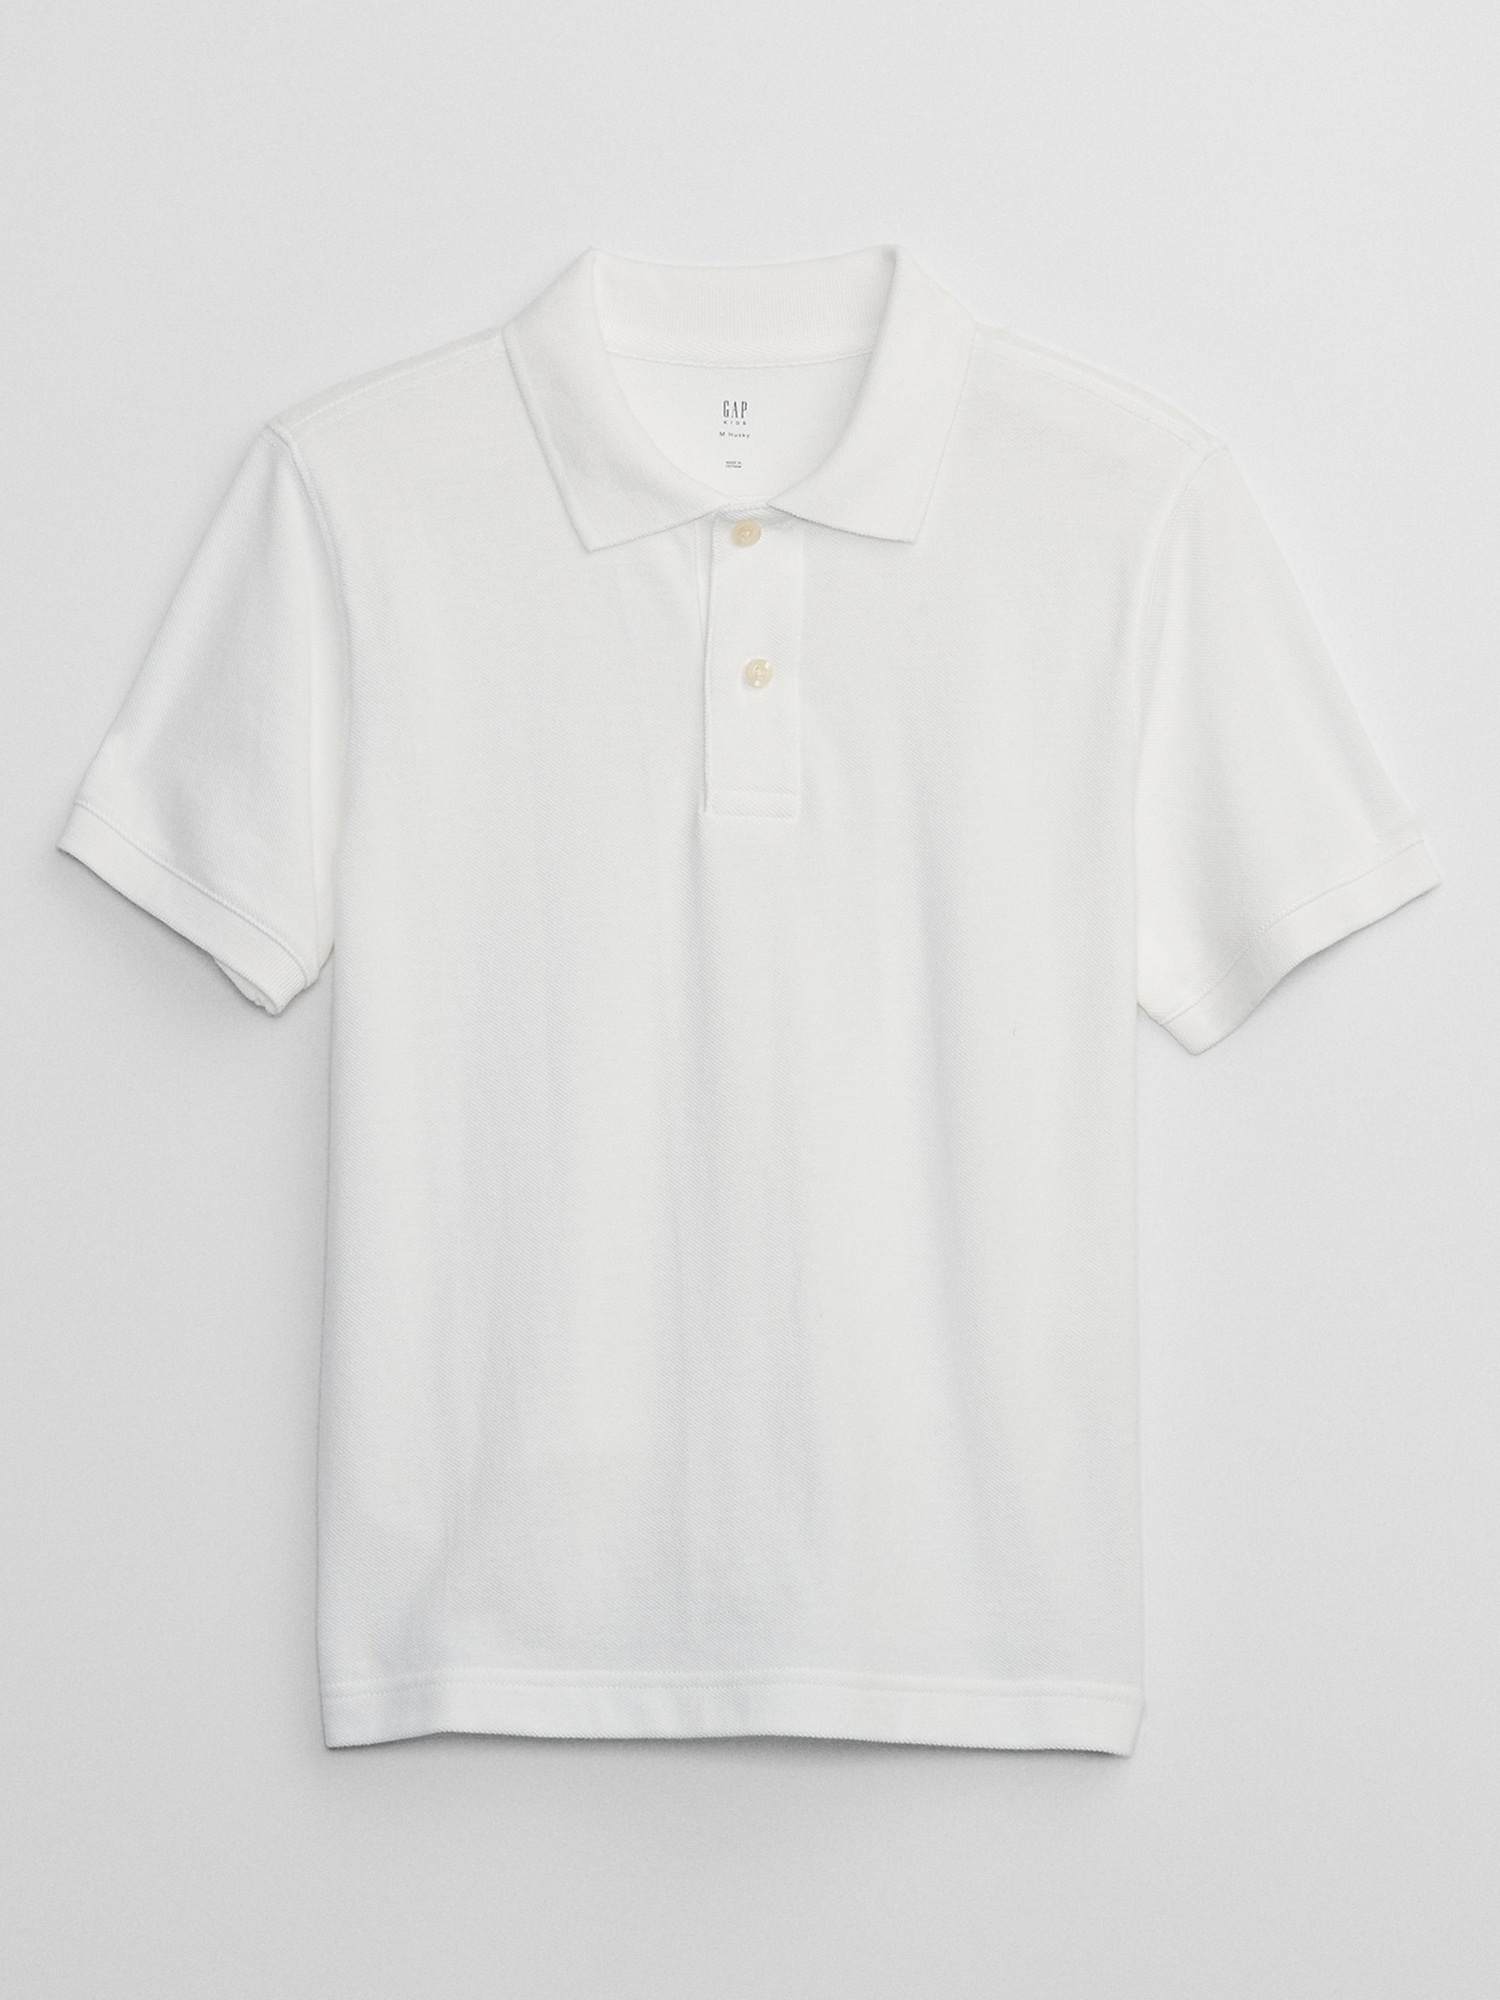 Kids Uniform Pique Polo Shirt | Gap Factory